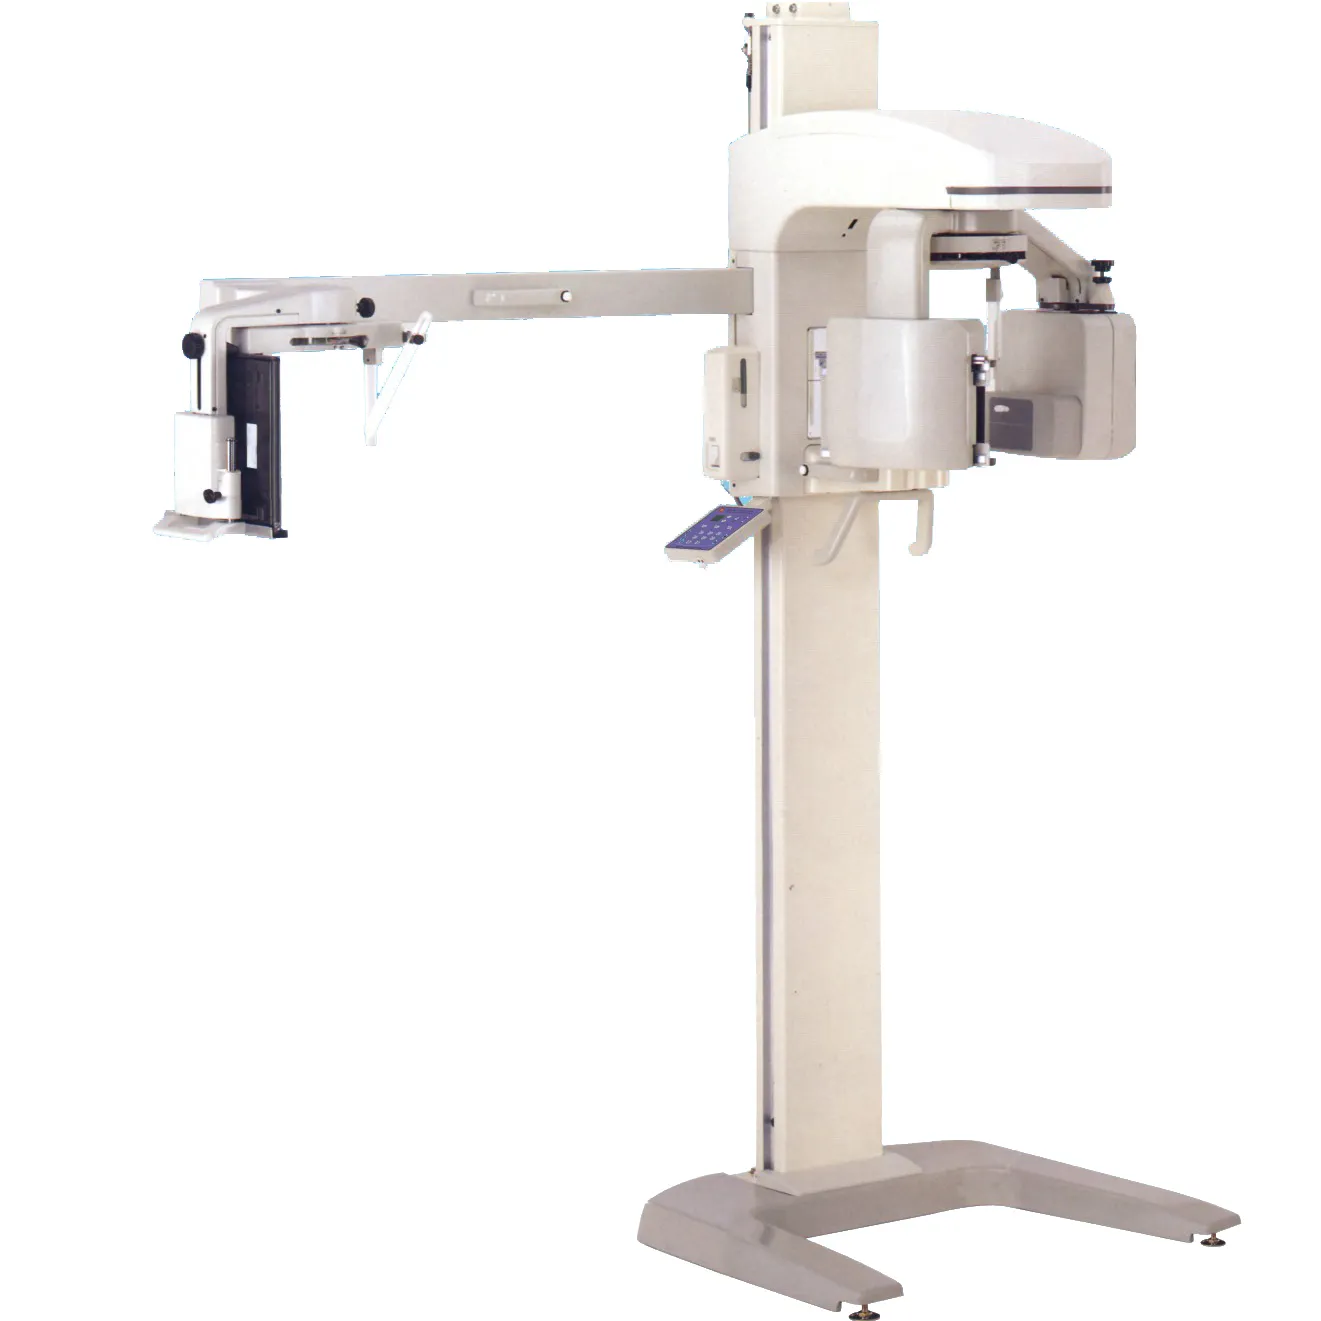 Dental Equipment Panorama X-ray DP2000 dental panoramic x-ray system